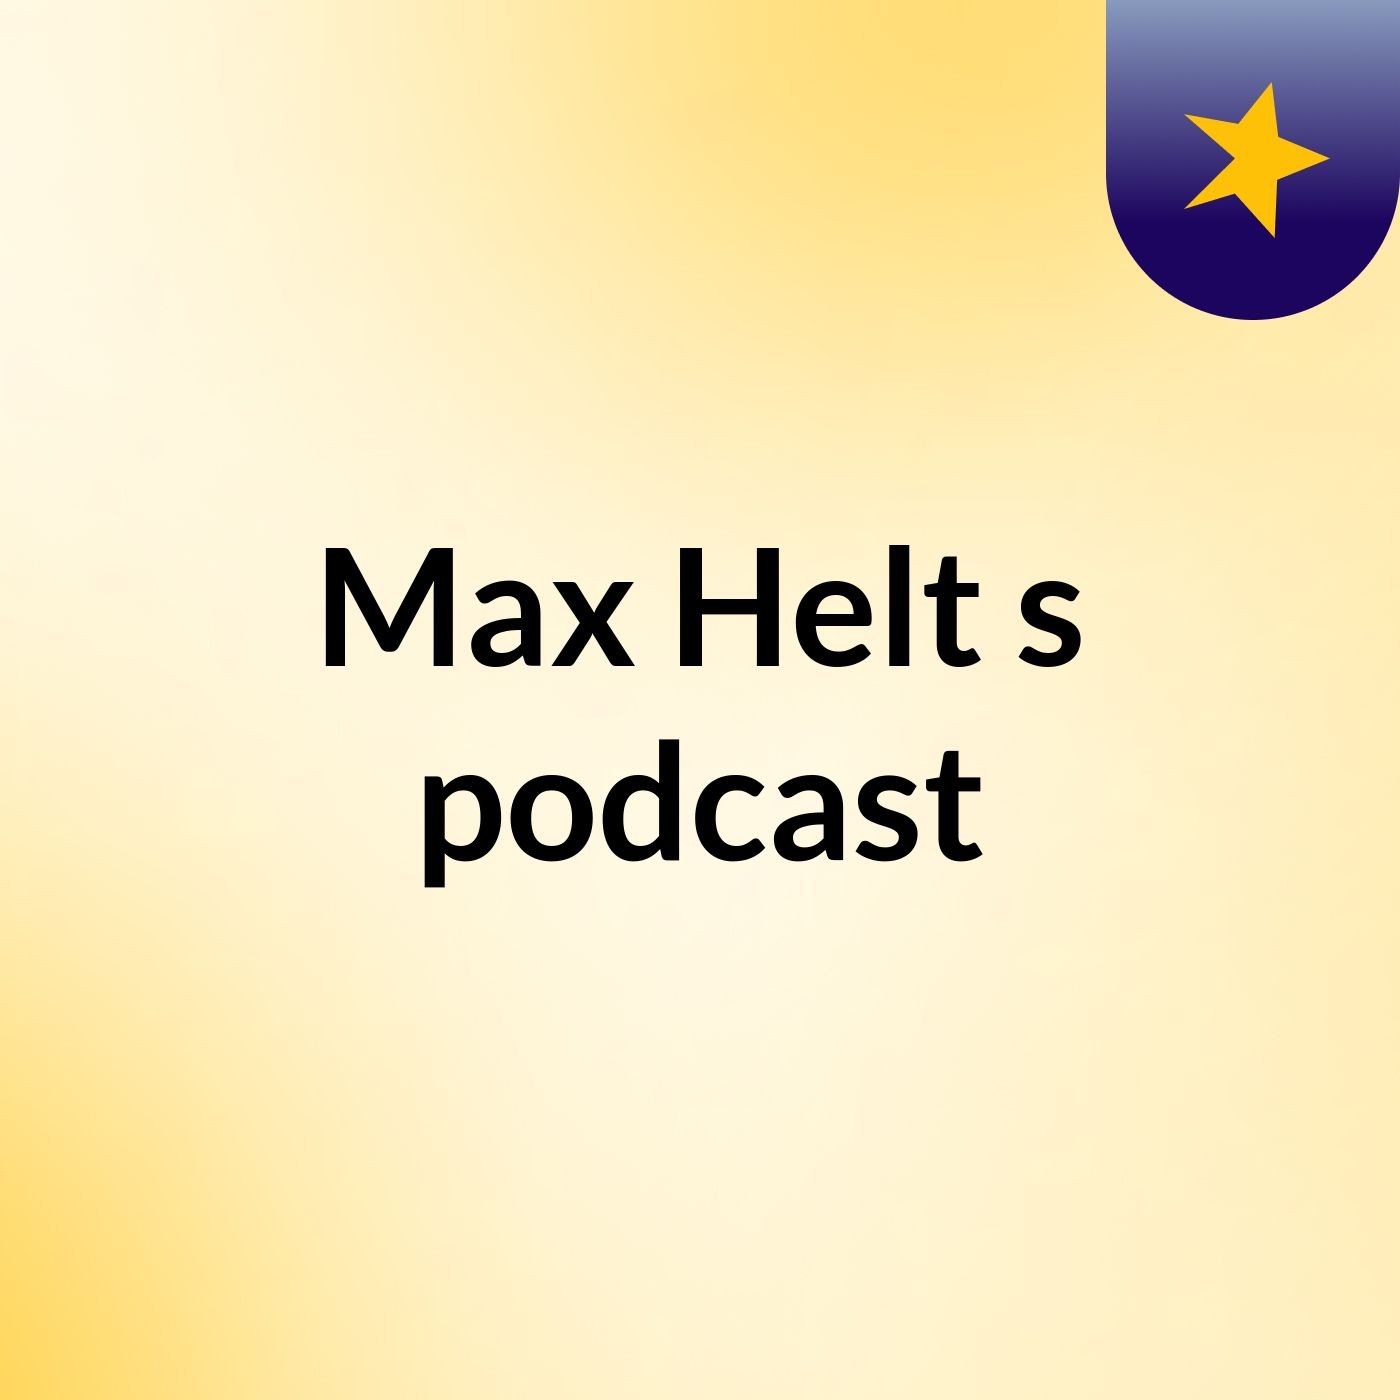 Max Helt's podcast